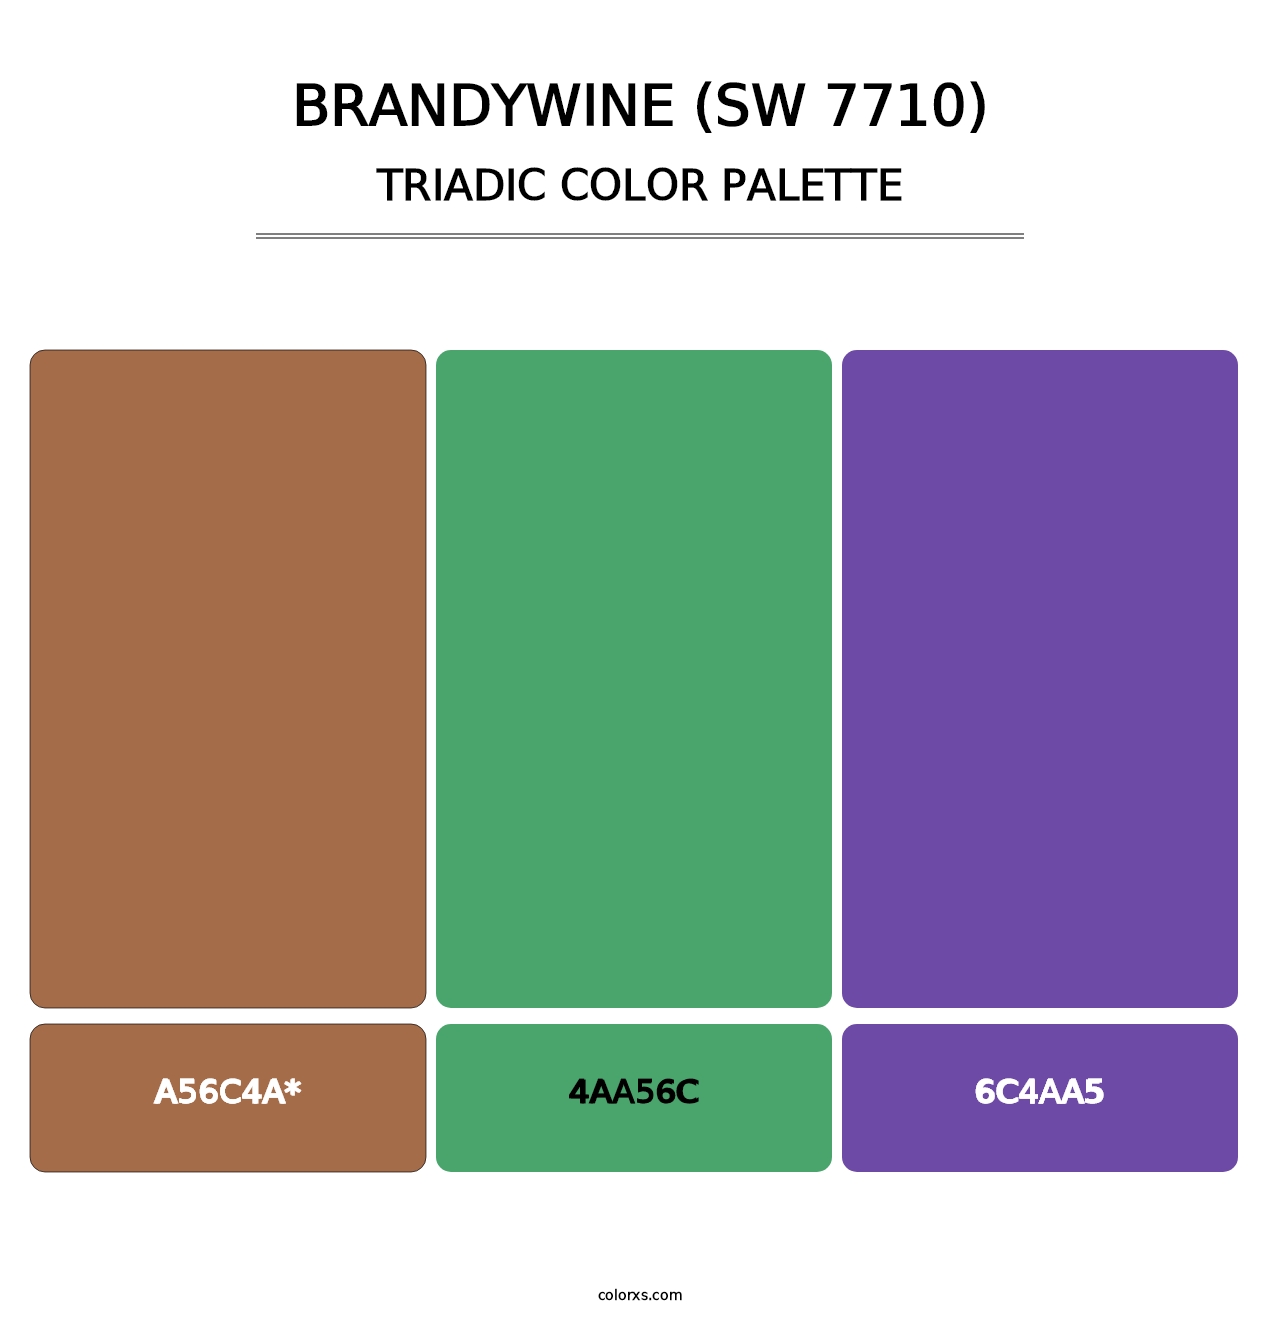 Brandywine (SW 7710) - Triadic Color Palette